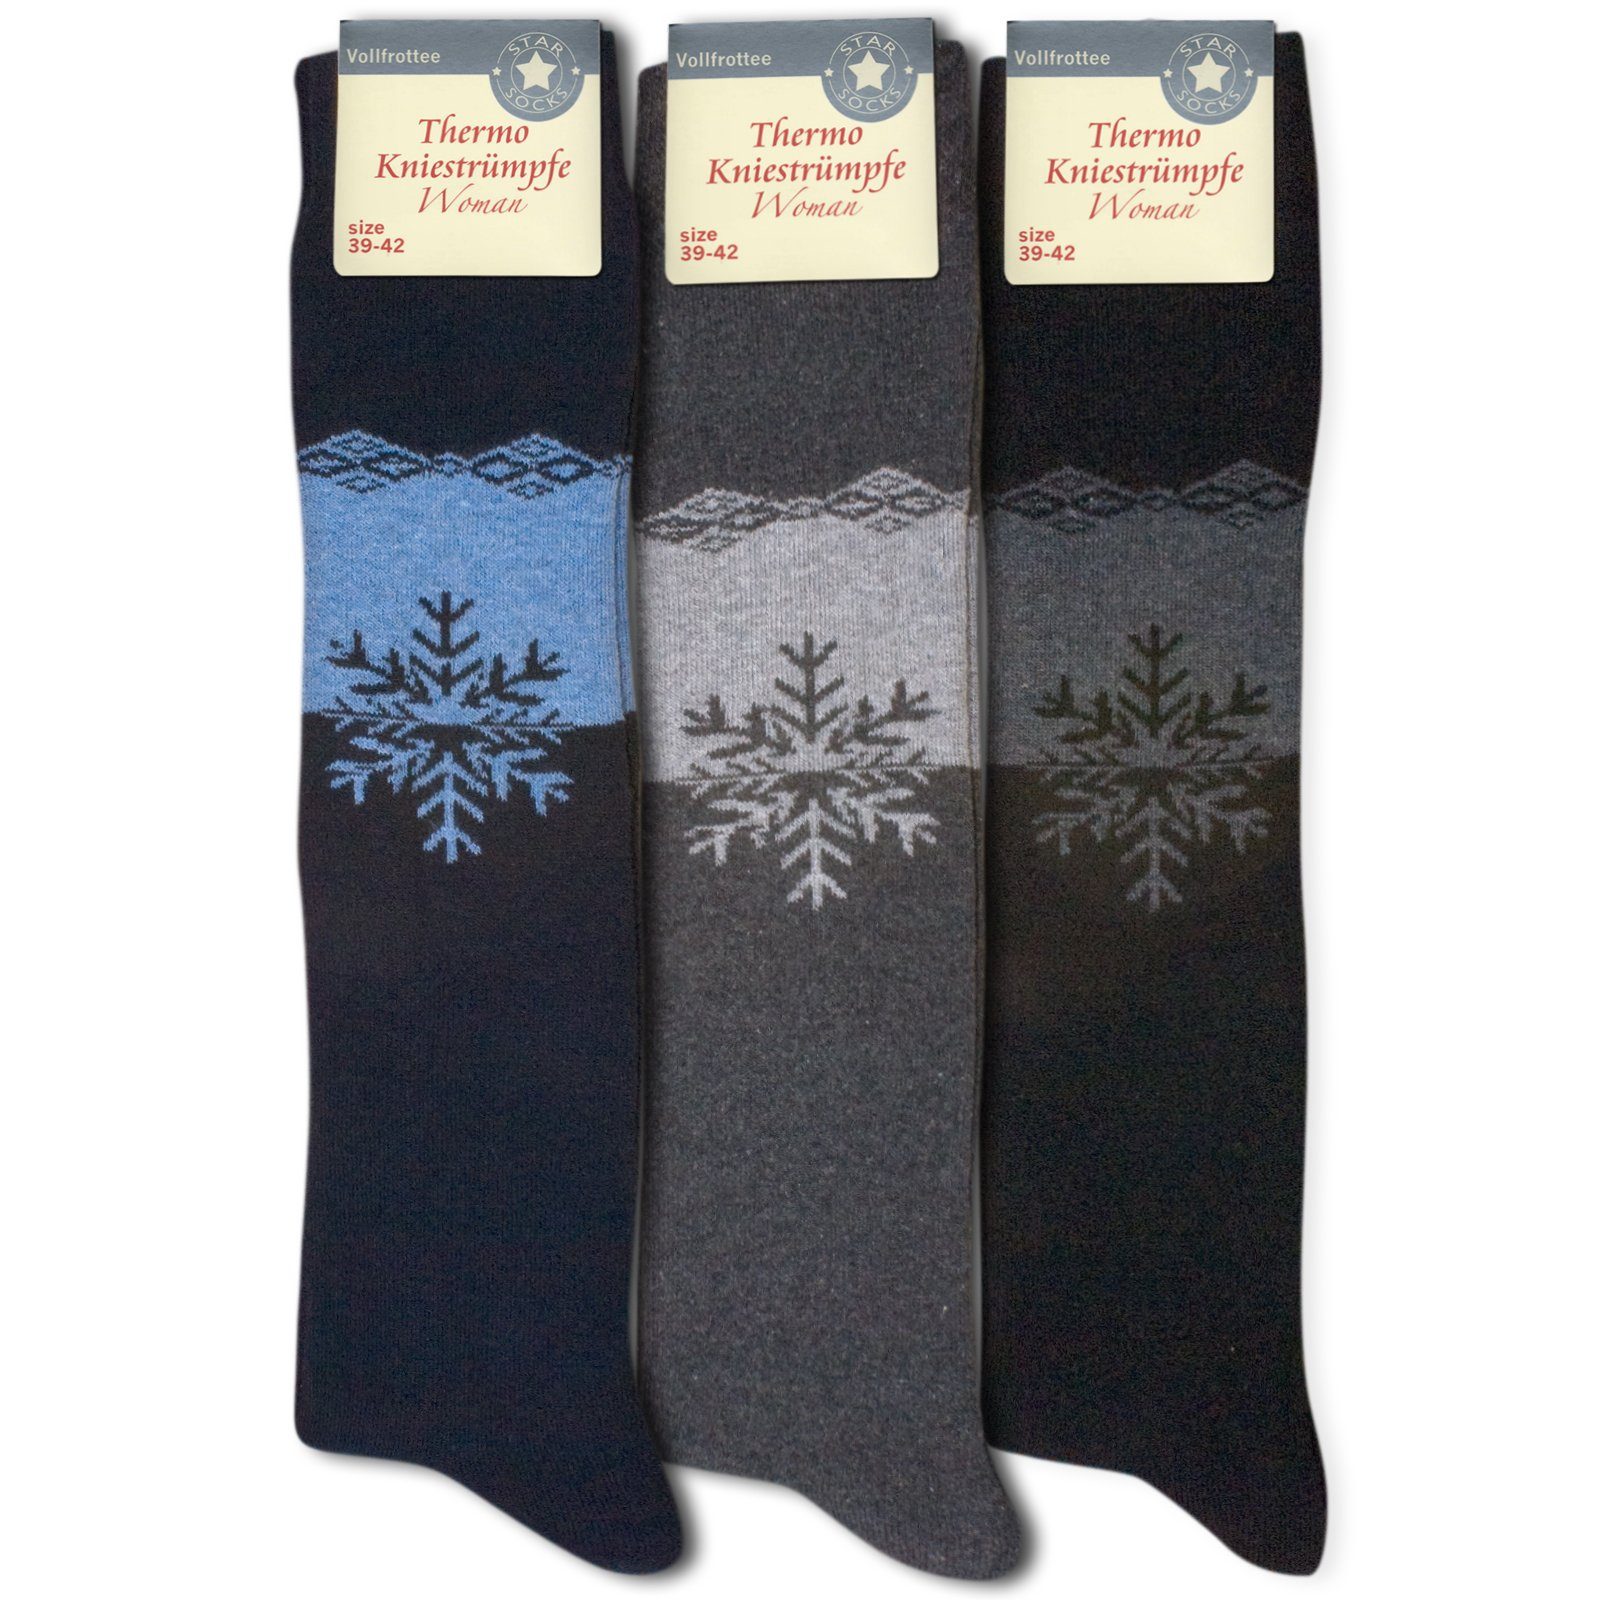 THERMO Die schwarz) grau Sockenbude vollfrottee Kniestrümpfe (Bund, dunkelblau 3-Paar,